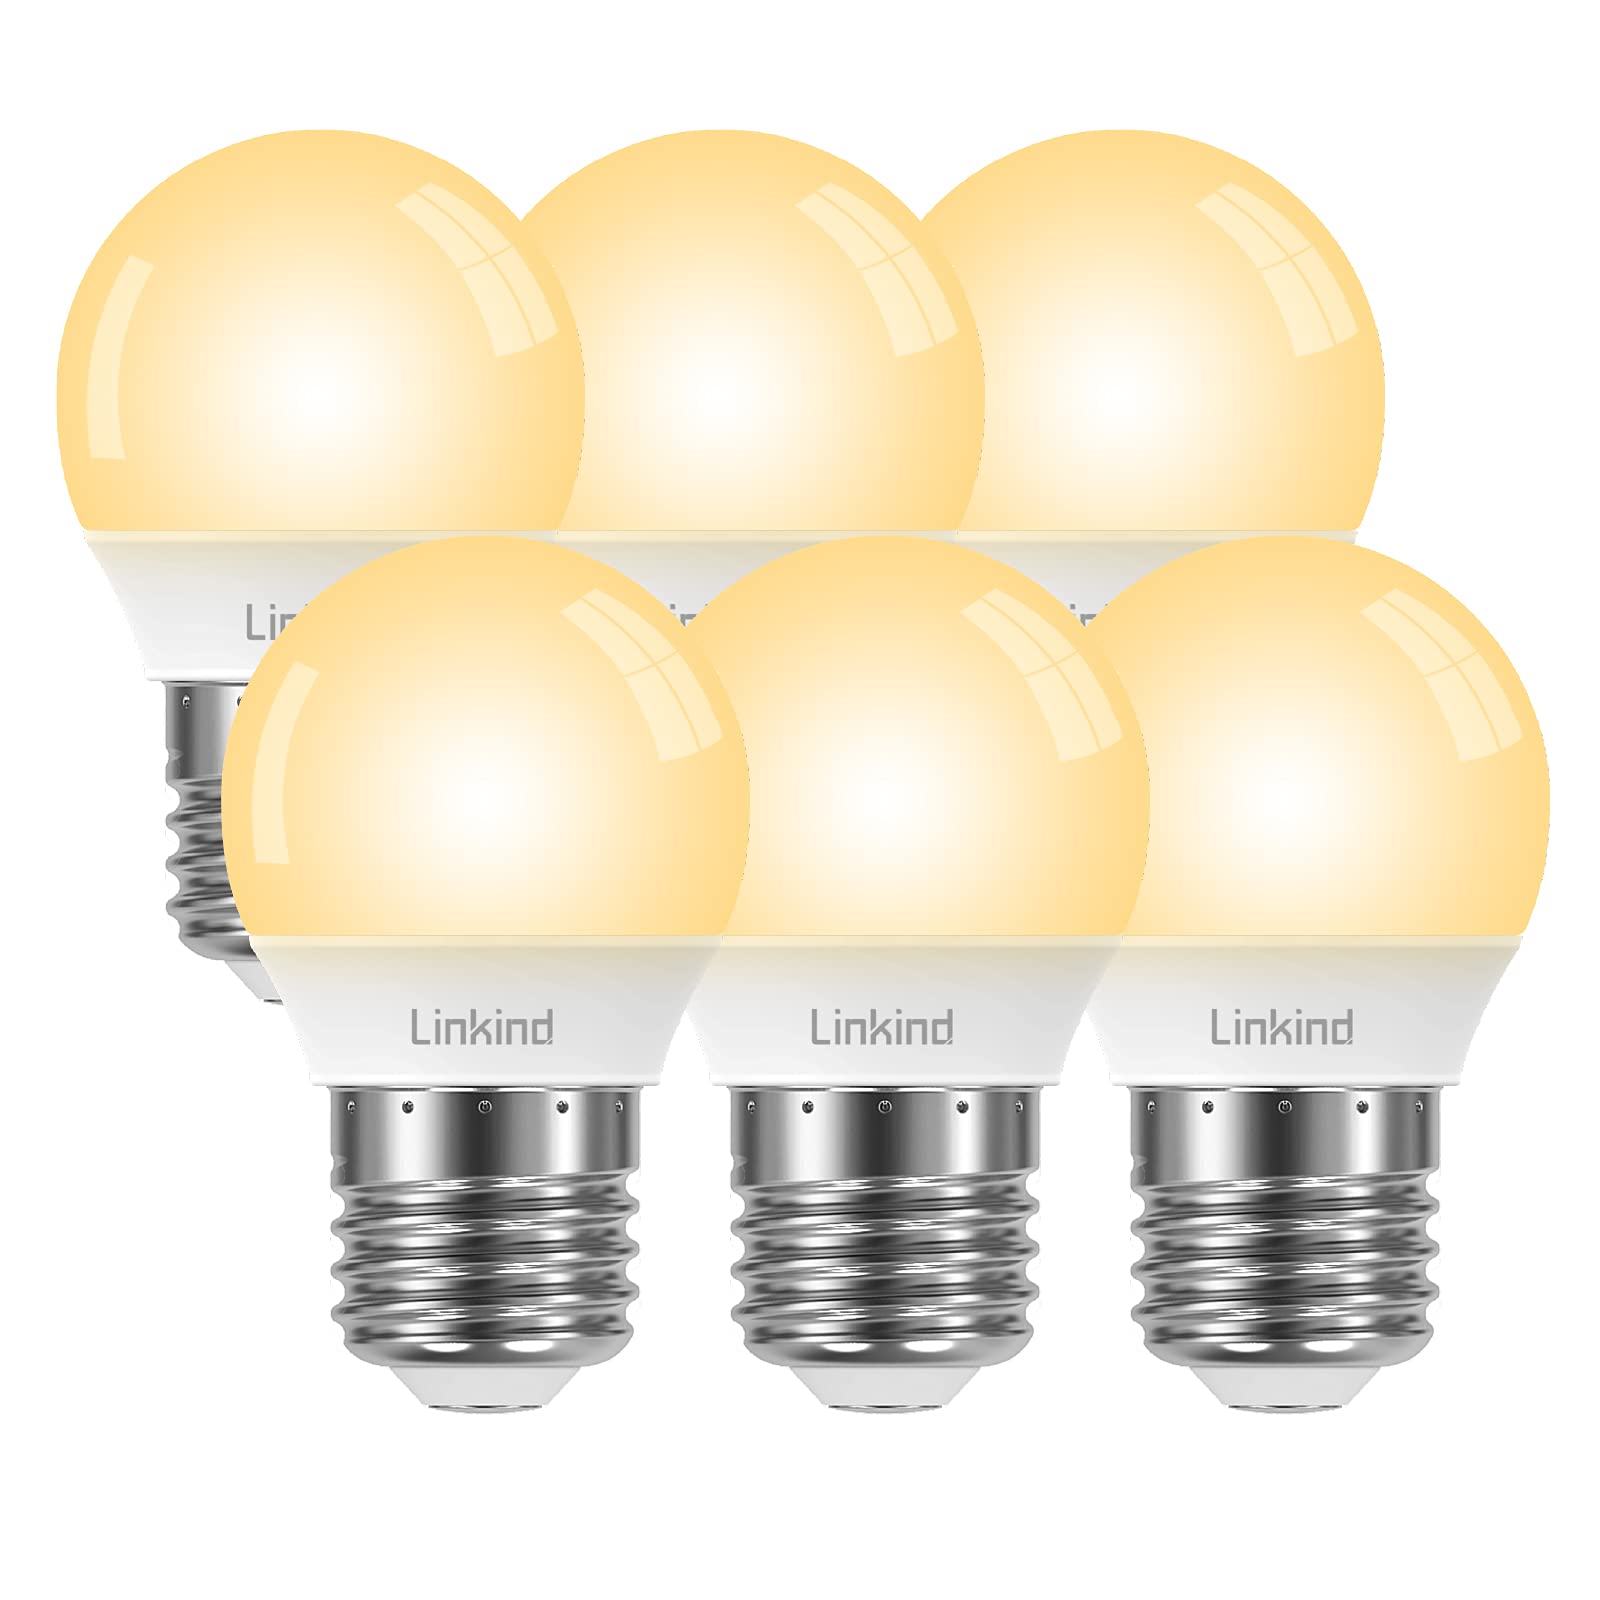 Linkind 4.9W G45 Golf Ball LED Lights E27 Edison Screw Mini Globe Bulb, 40W Equivalent, 470 Lumen, Soft White 2700K, AC 220-240V, Non-Dimmable, 6 Pack